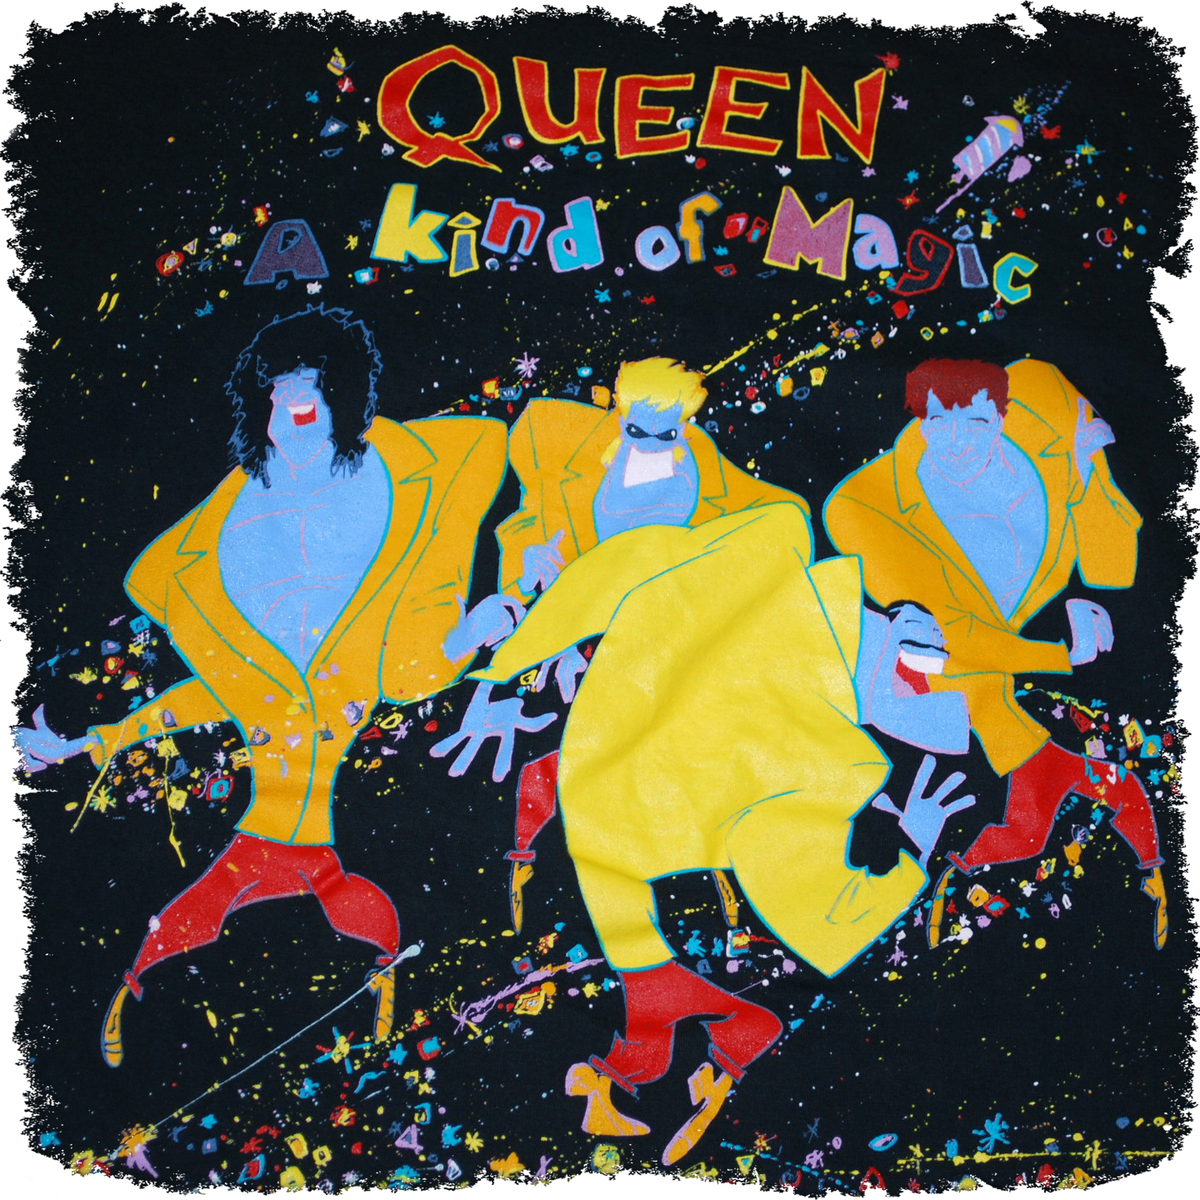 Magic альбомы. Альбом a kind of Magic 1986. Queen 1986 a kind of Magic обложка альбома. A kind of Magic альбом Квин. Queen a kind of Magic обложка.